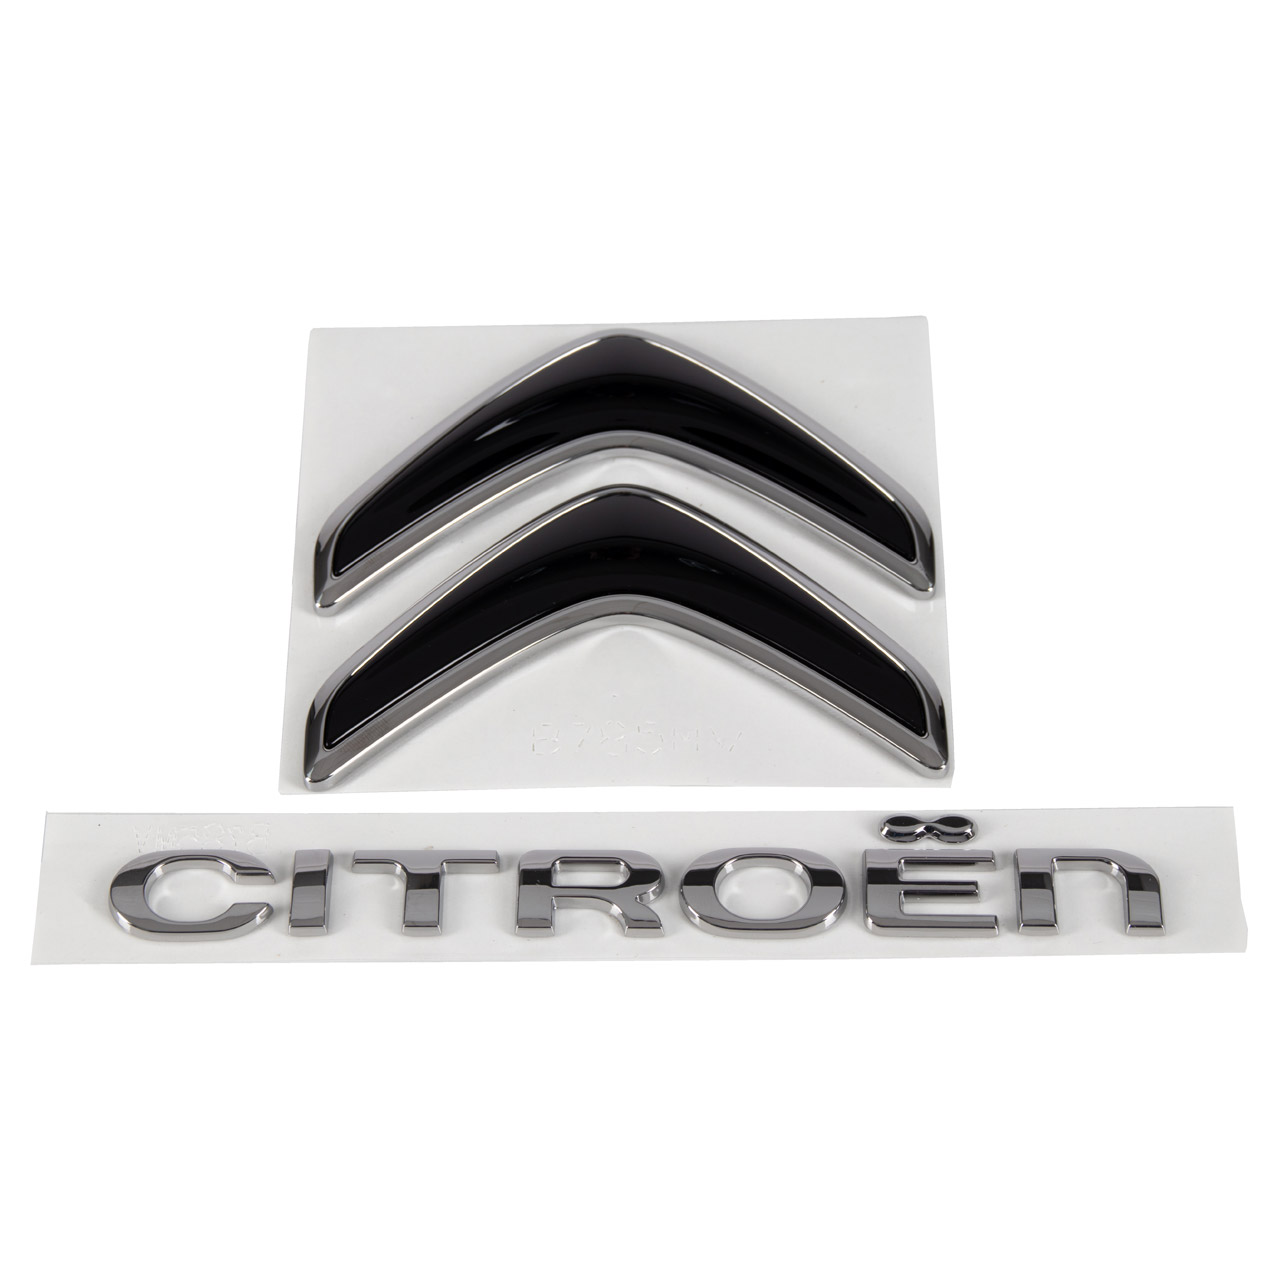 ORIGINAL Citroen Emblem Plakette Schriftzug Heckklappe C4 Picasso 2 Facelift 98161822DX